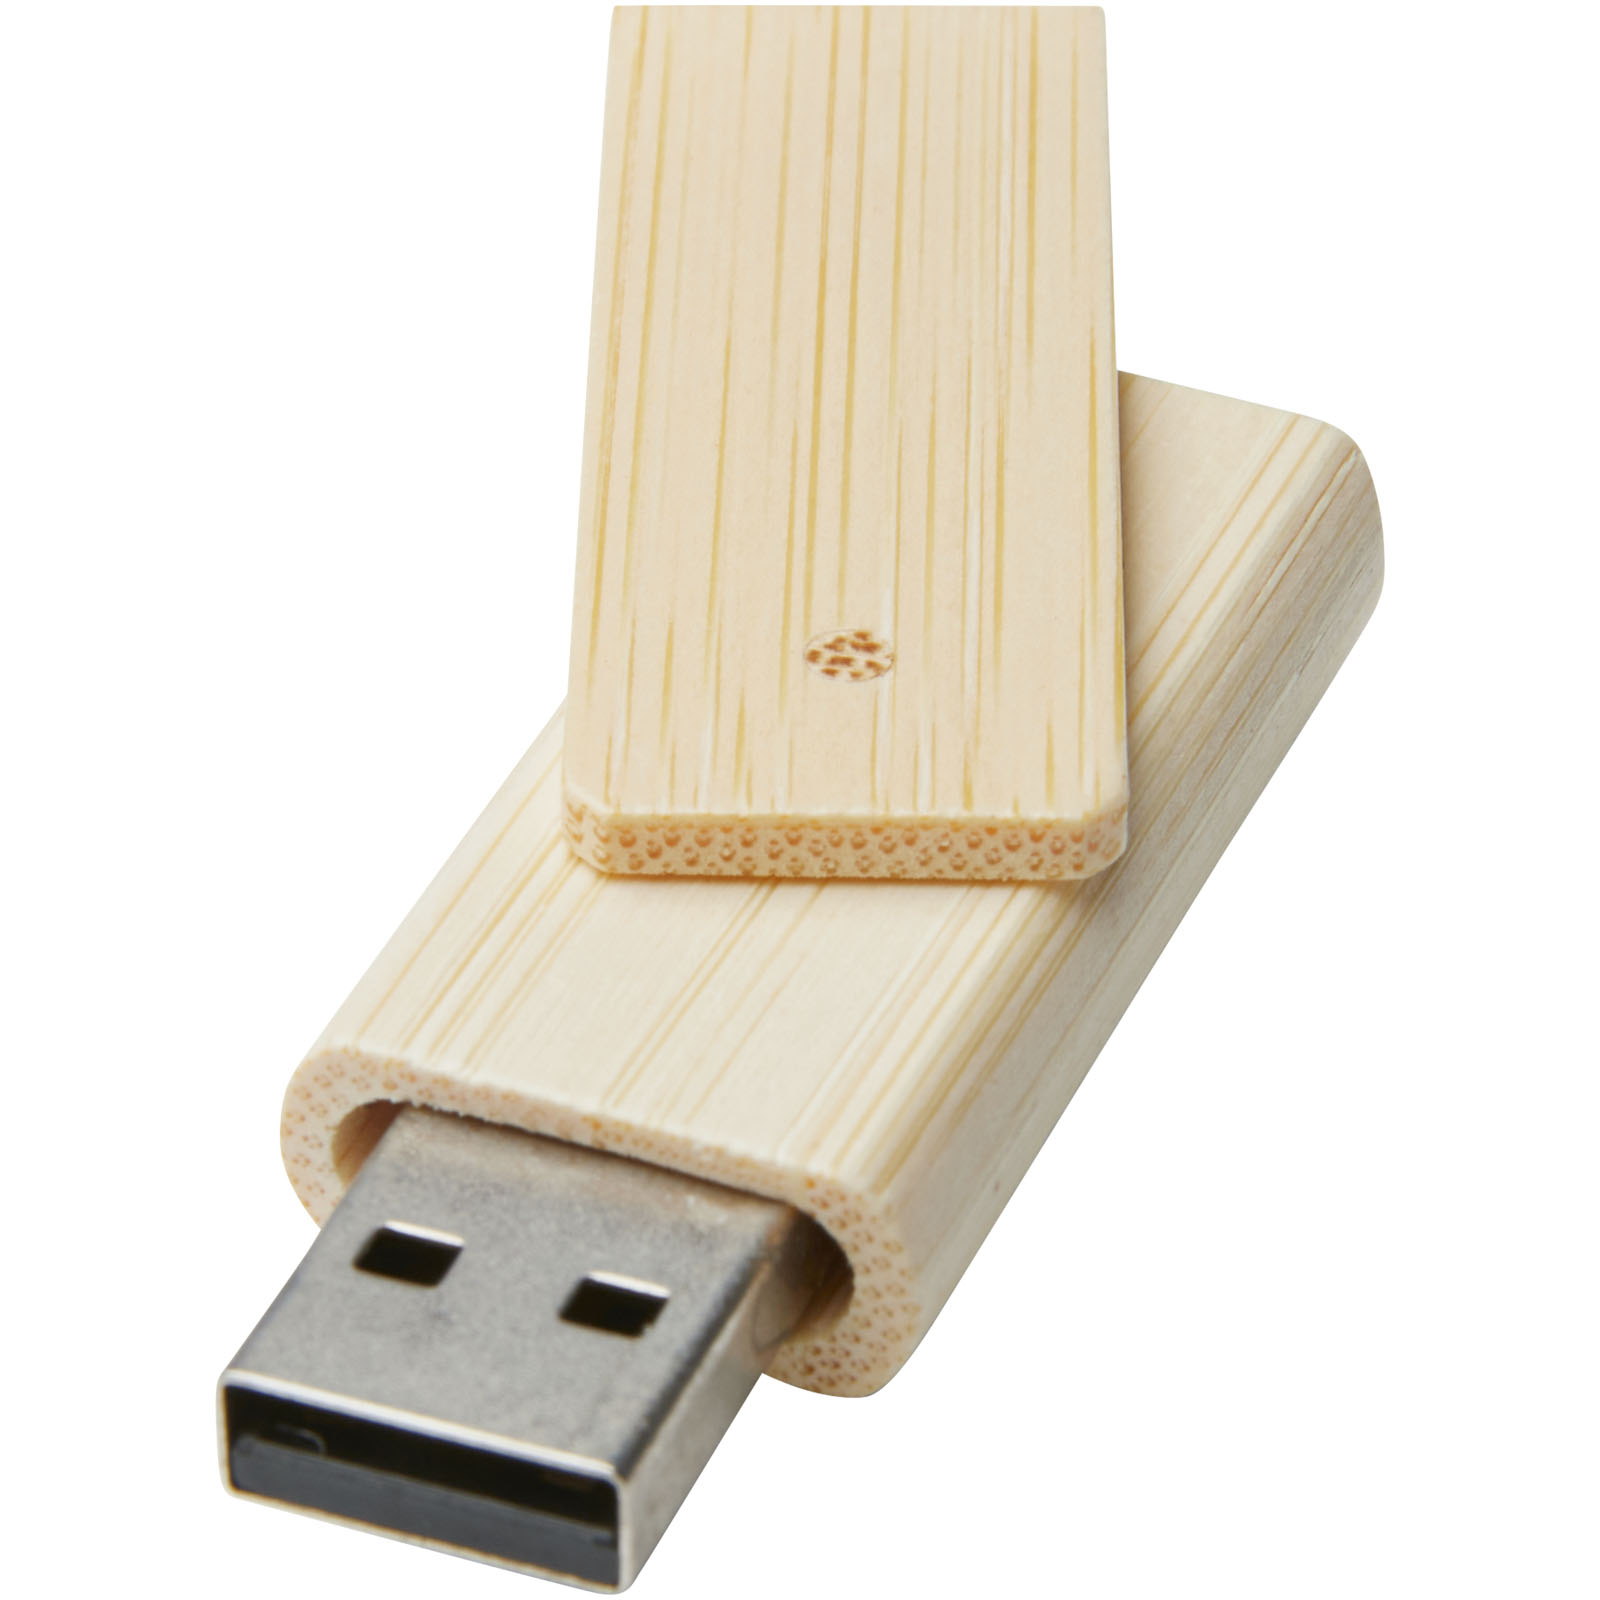 Chiavetta USB 2.0 in Bamboo da 16GB - Adrara San Rocco